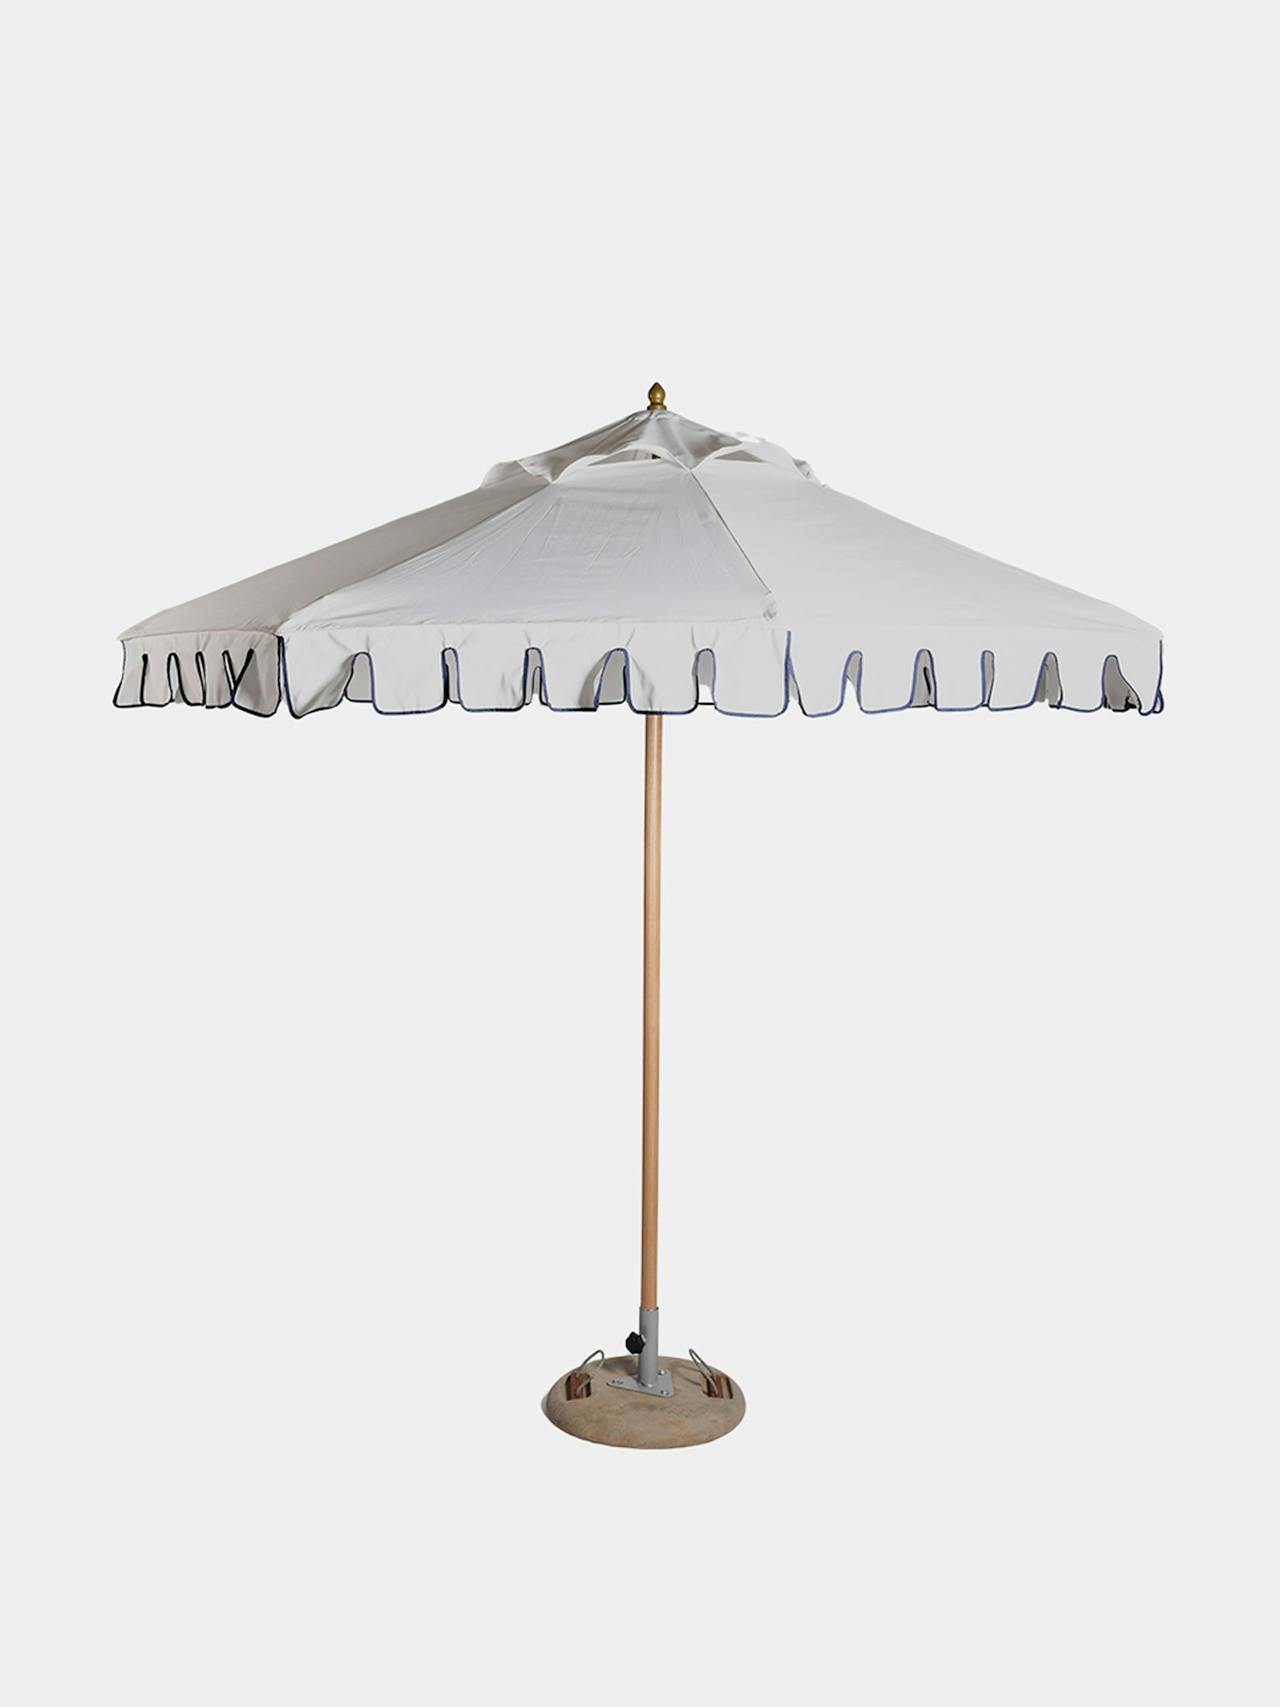 Scalloped parasol with navy trim in ecru, 300cm